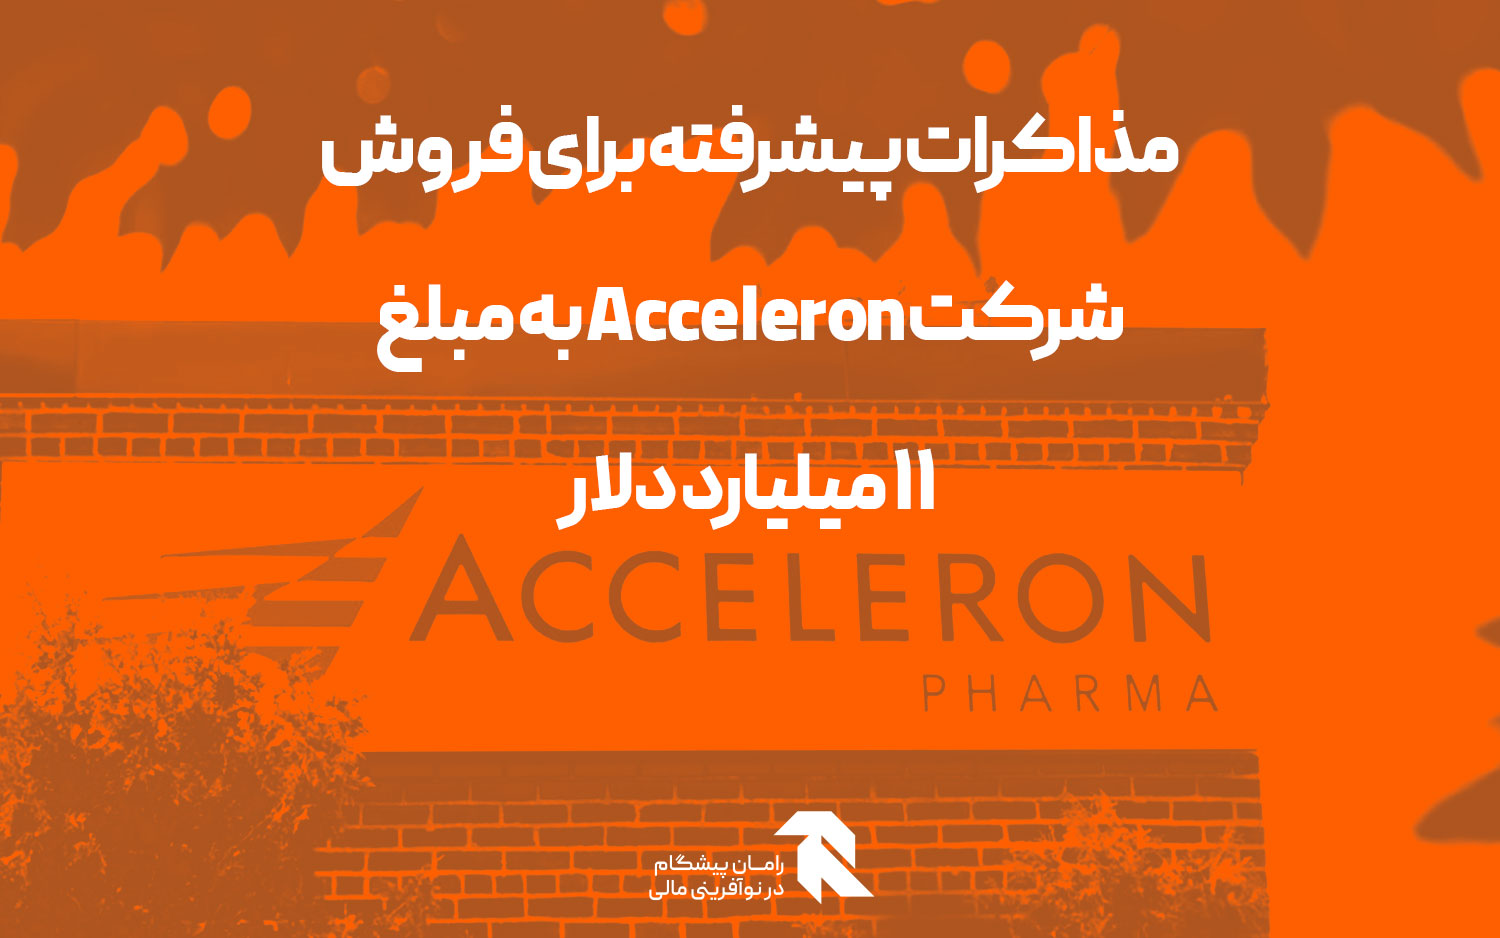 Acceleron in advanced talks for $11 billion sale